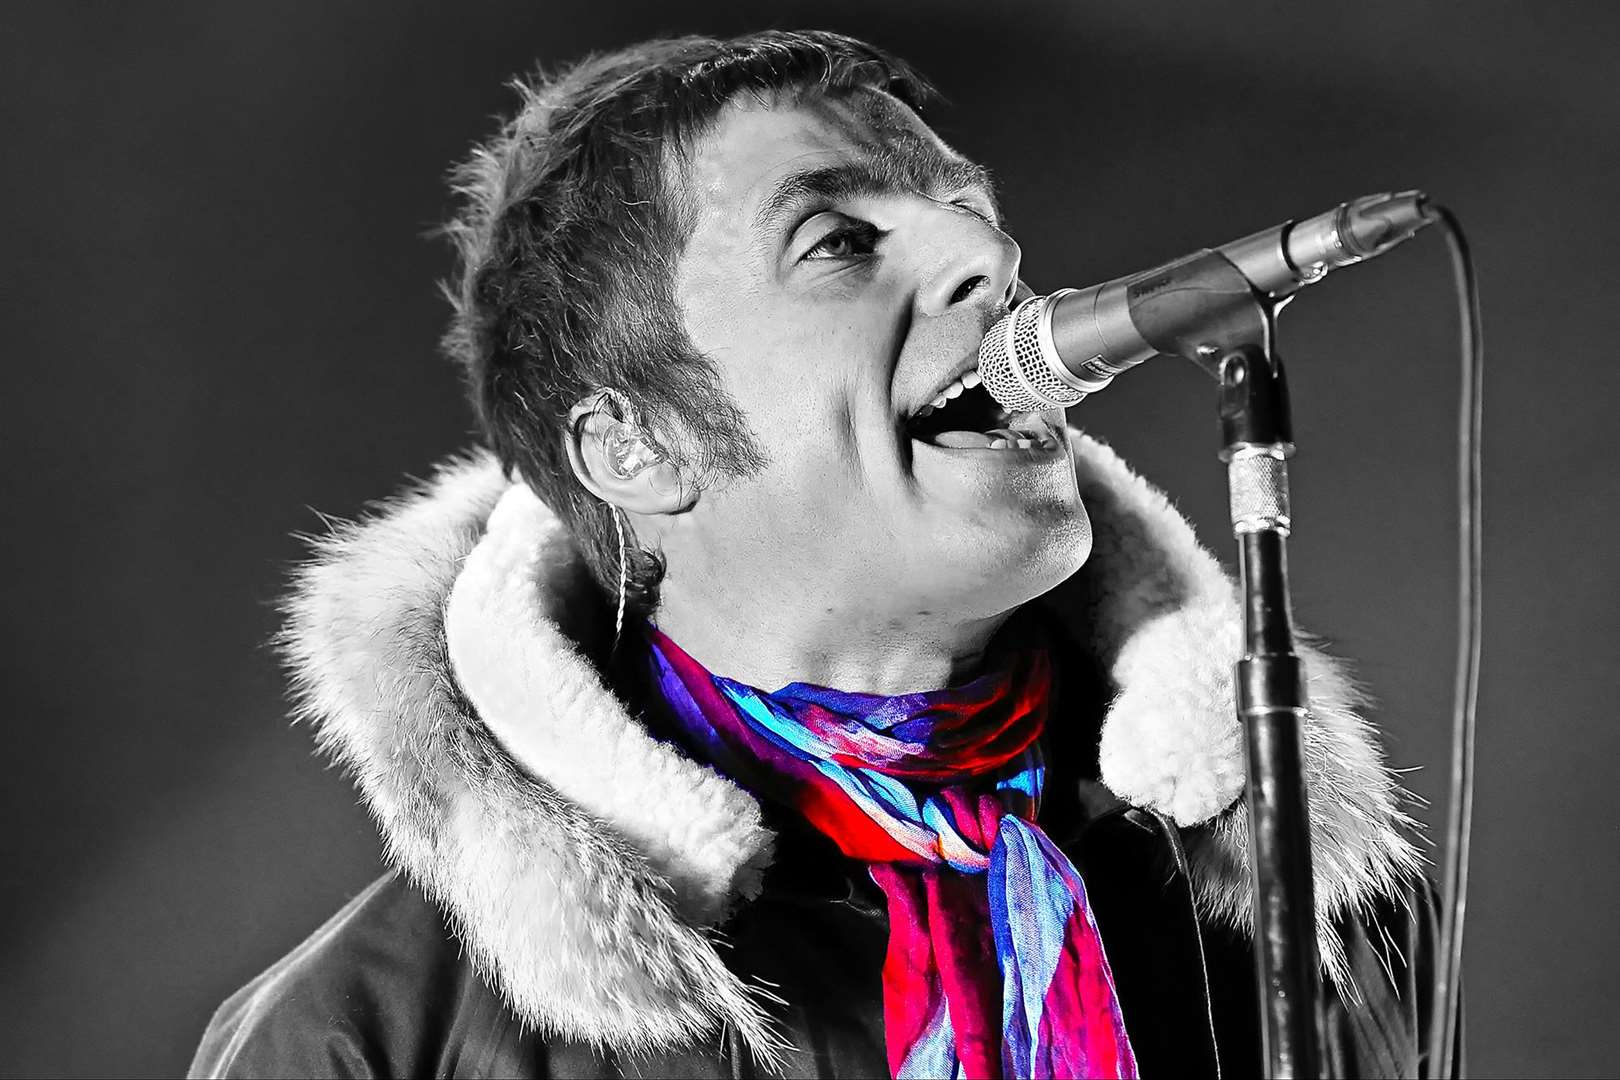 Matt Kent has photographed Oasis frontman Liam Gallagher